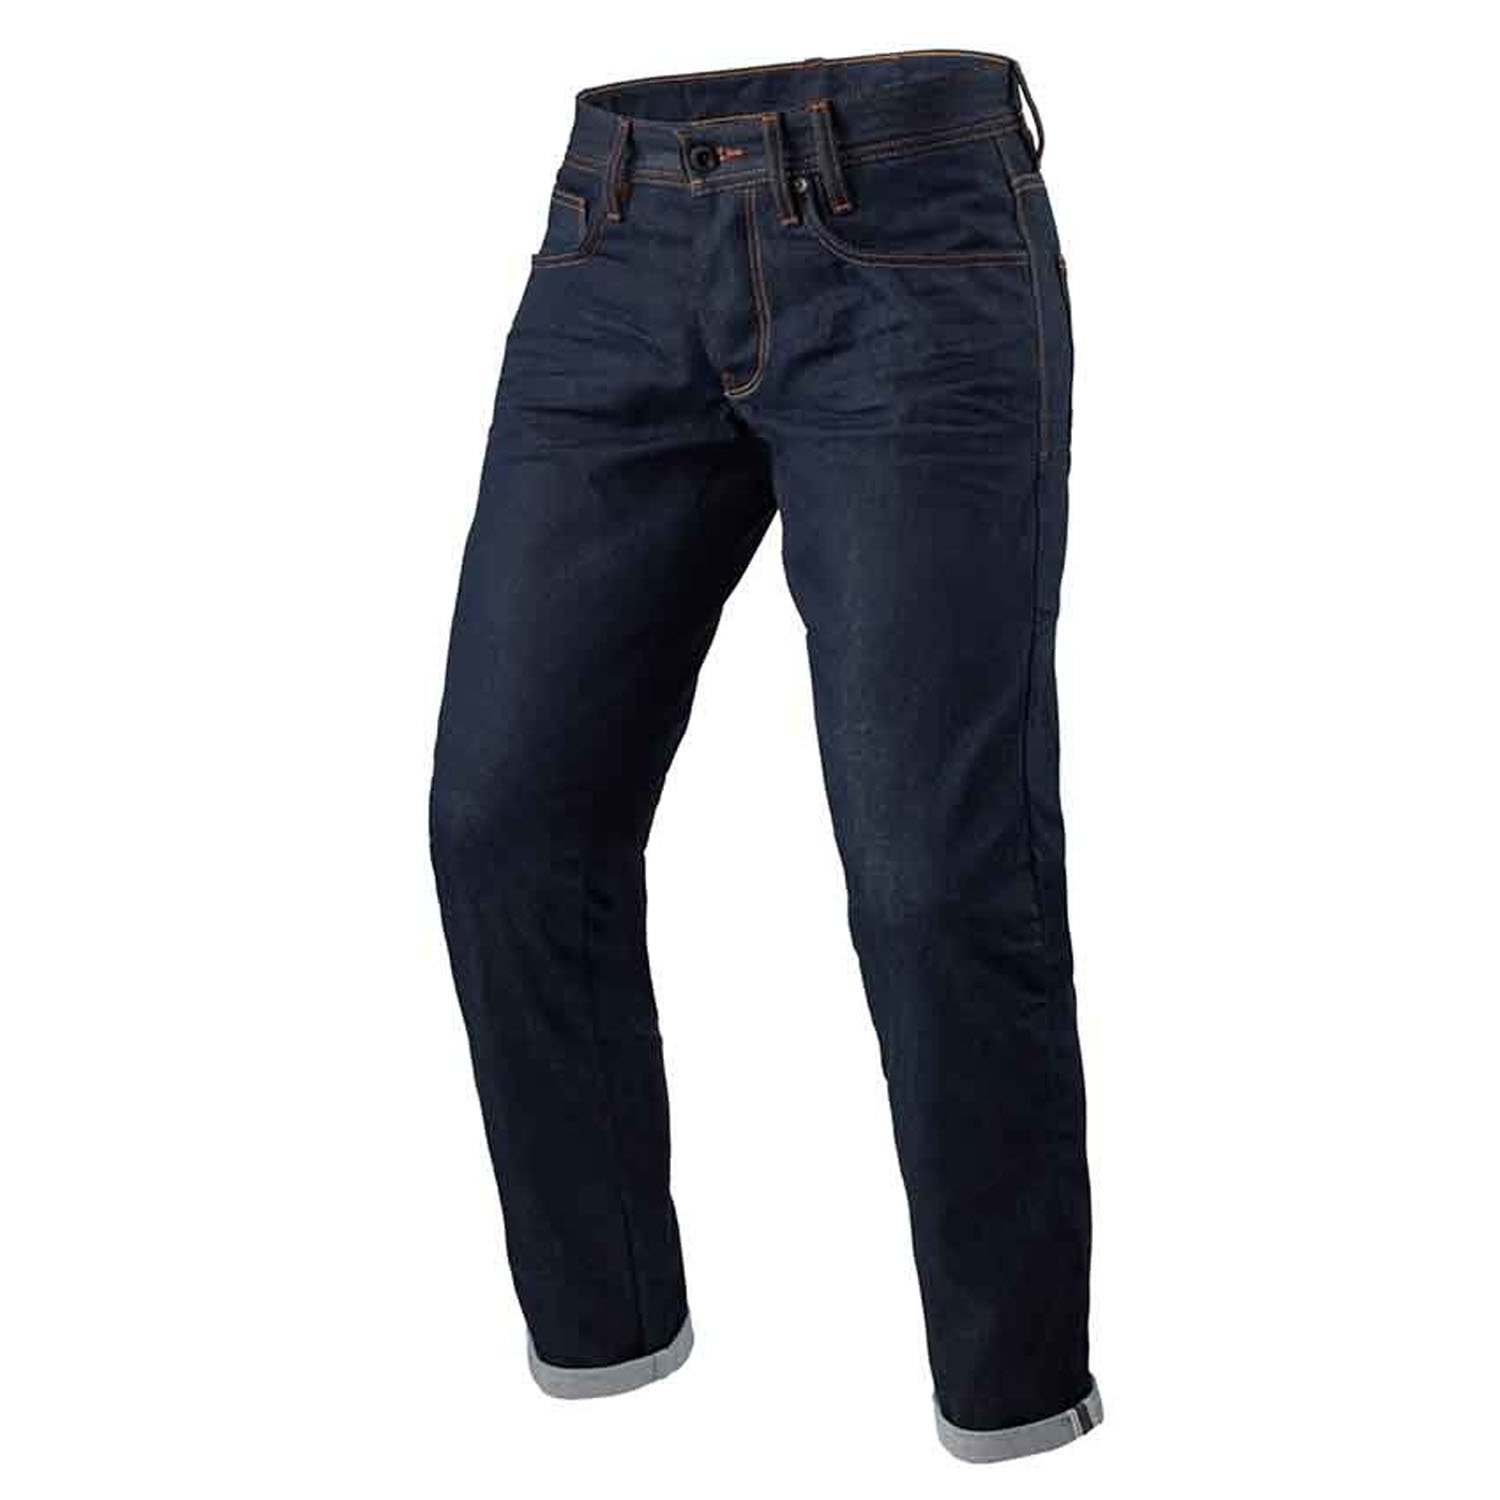 Image of REV'IT! Jeans Lewis Selvedge TF Dark Blue L36 Motorcycle Pants Talla L36/W32